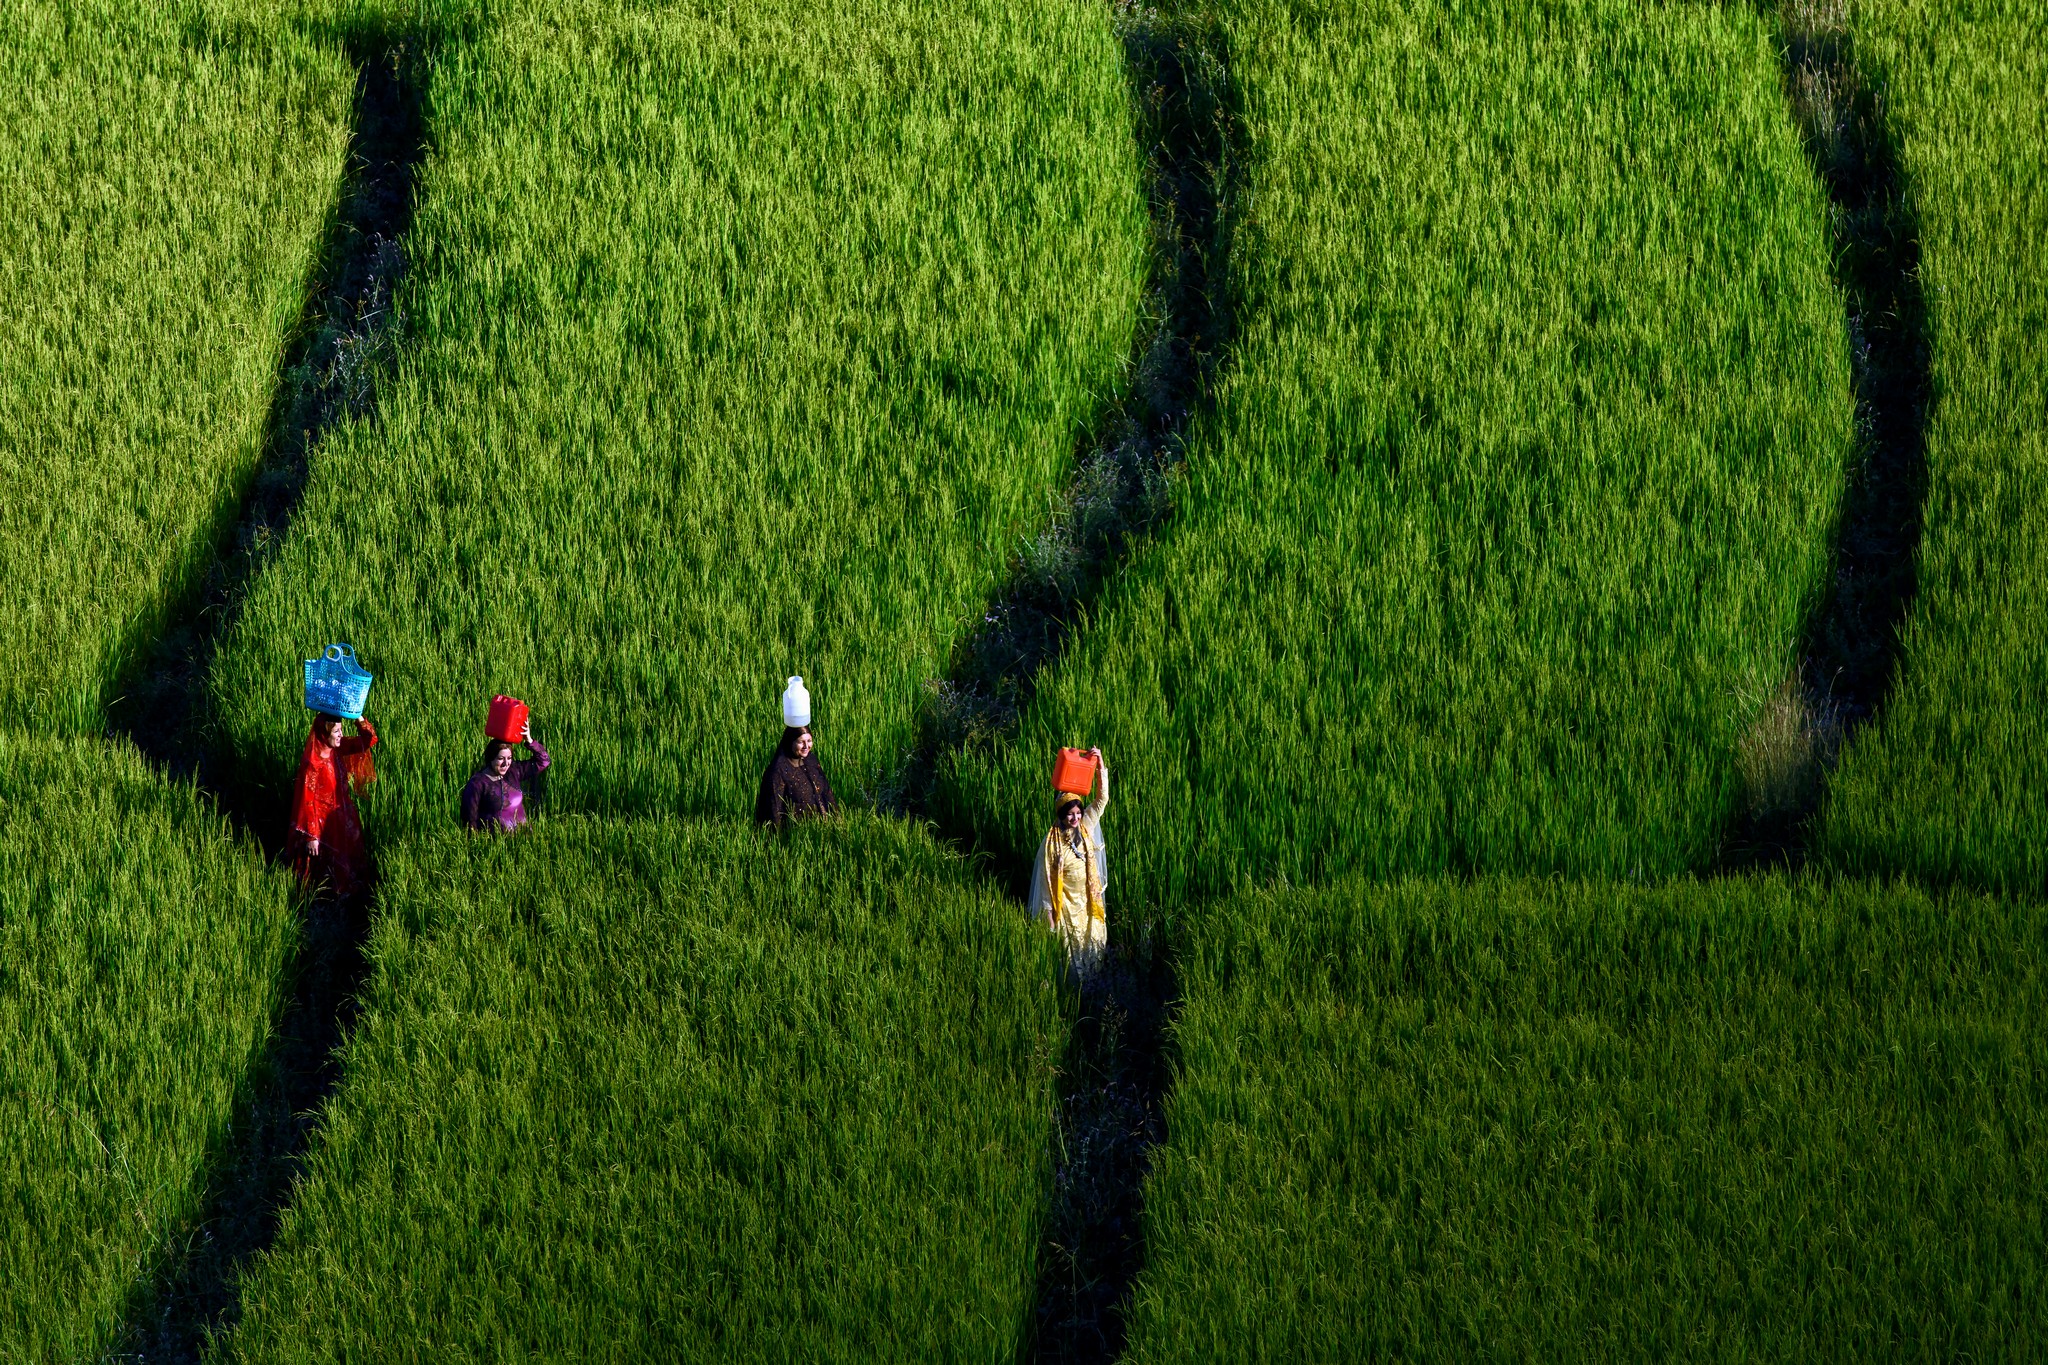 Women in rice paddy